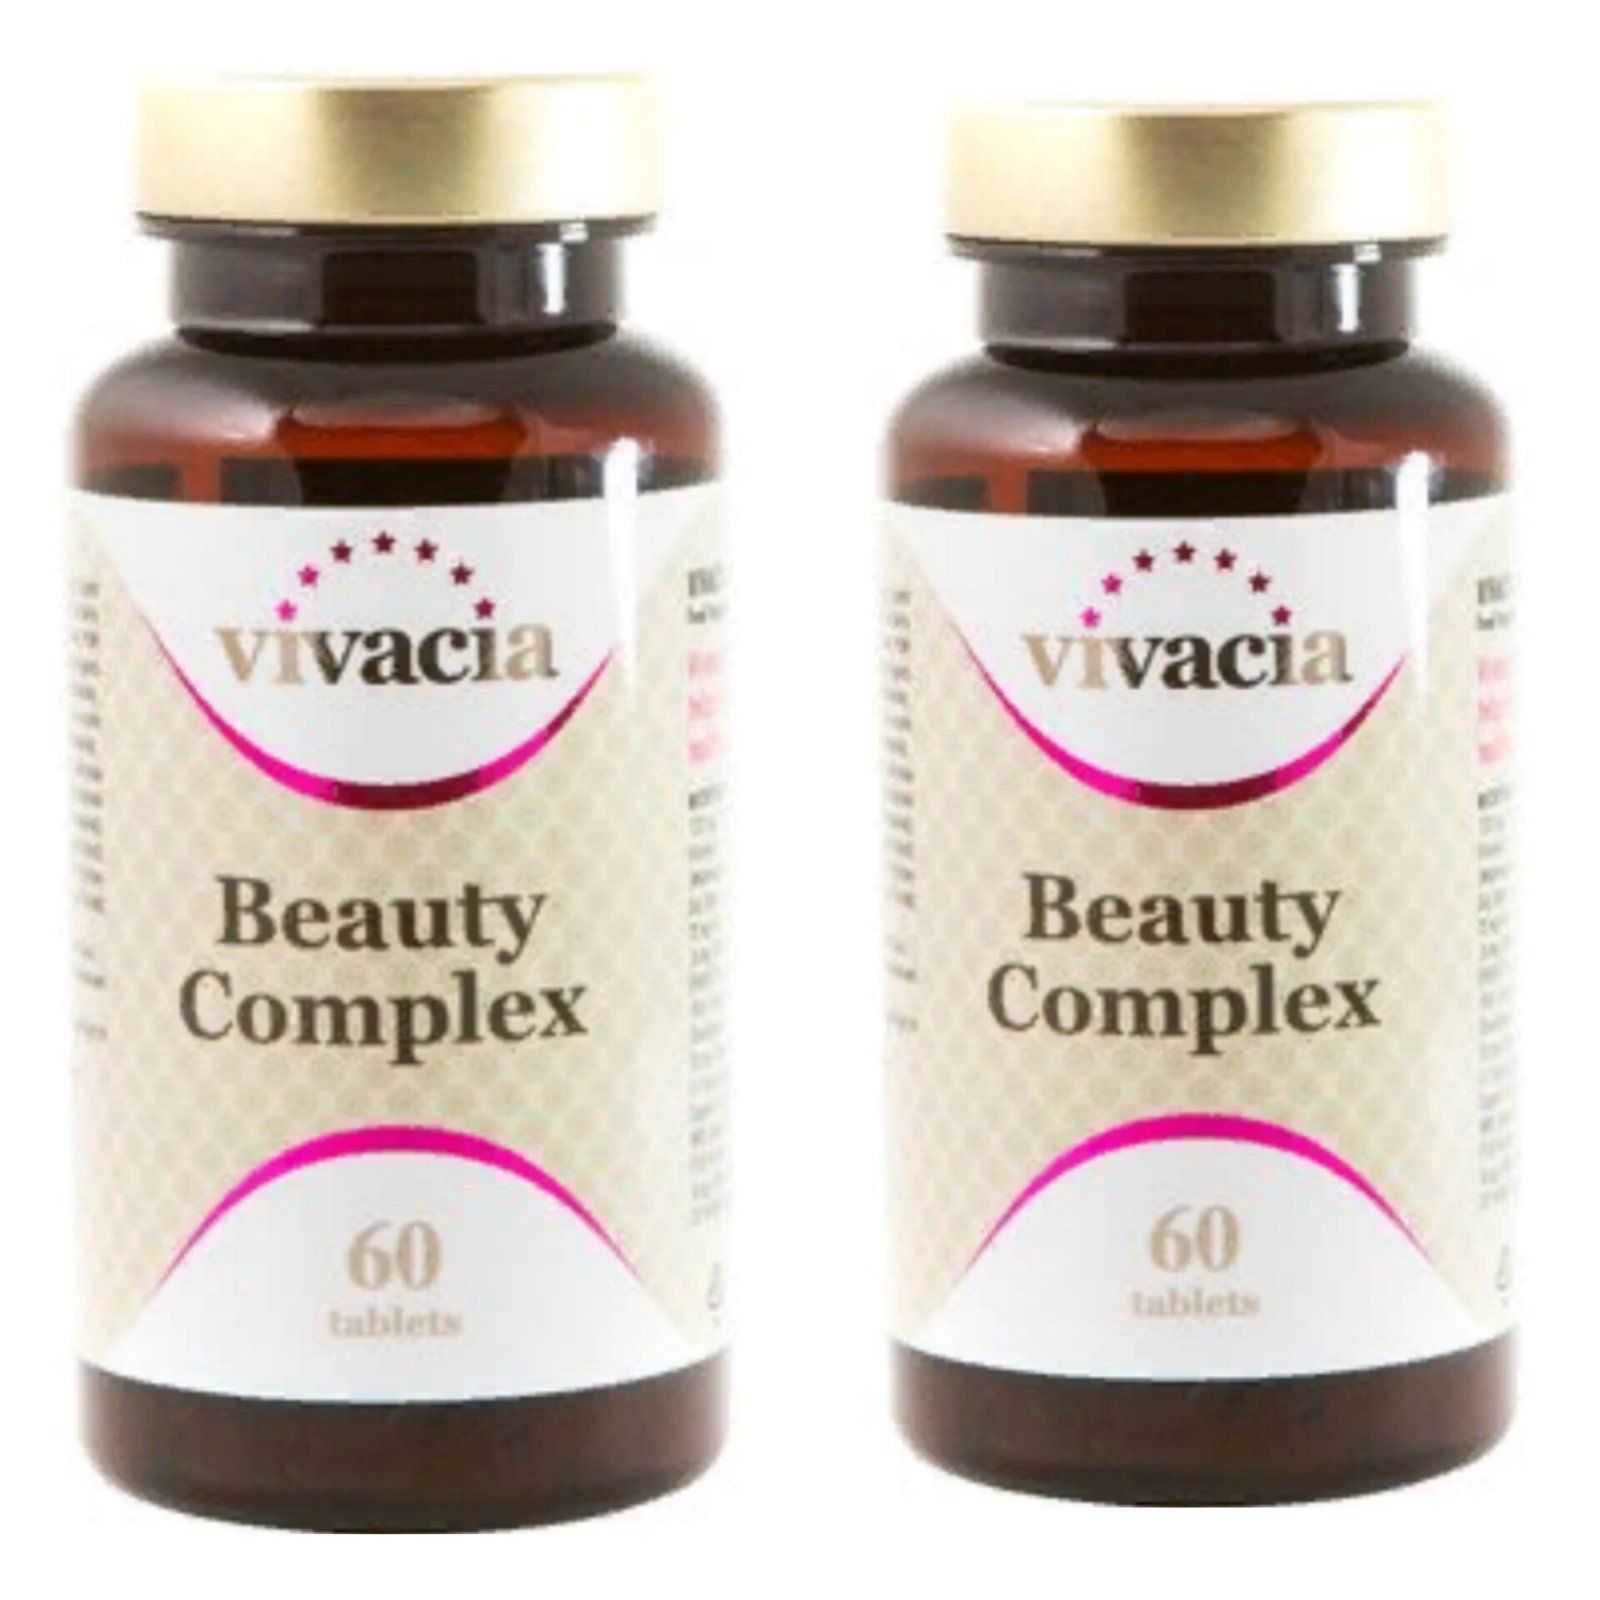 Vivacia vitamin. Vivacia витамины Beauty Complex. Vivacia Beauty Complex таблетки. Кмплекс тьюти витаминов. Бьютикомплекс таб., 600 шт..